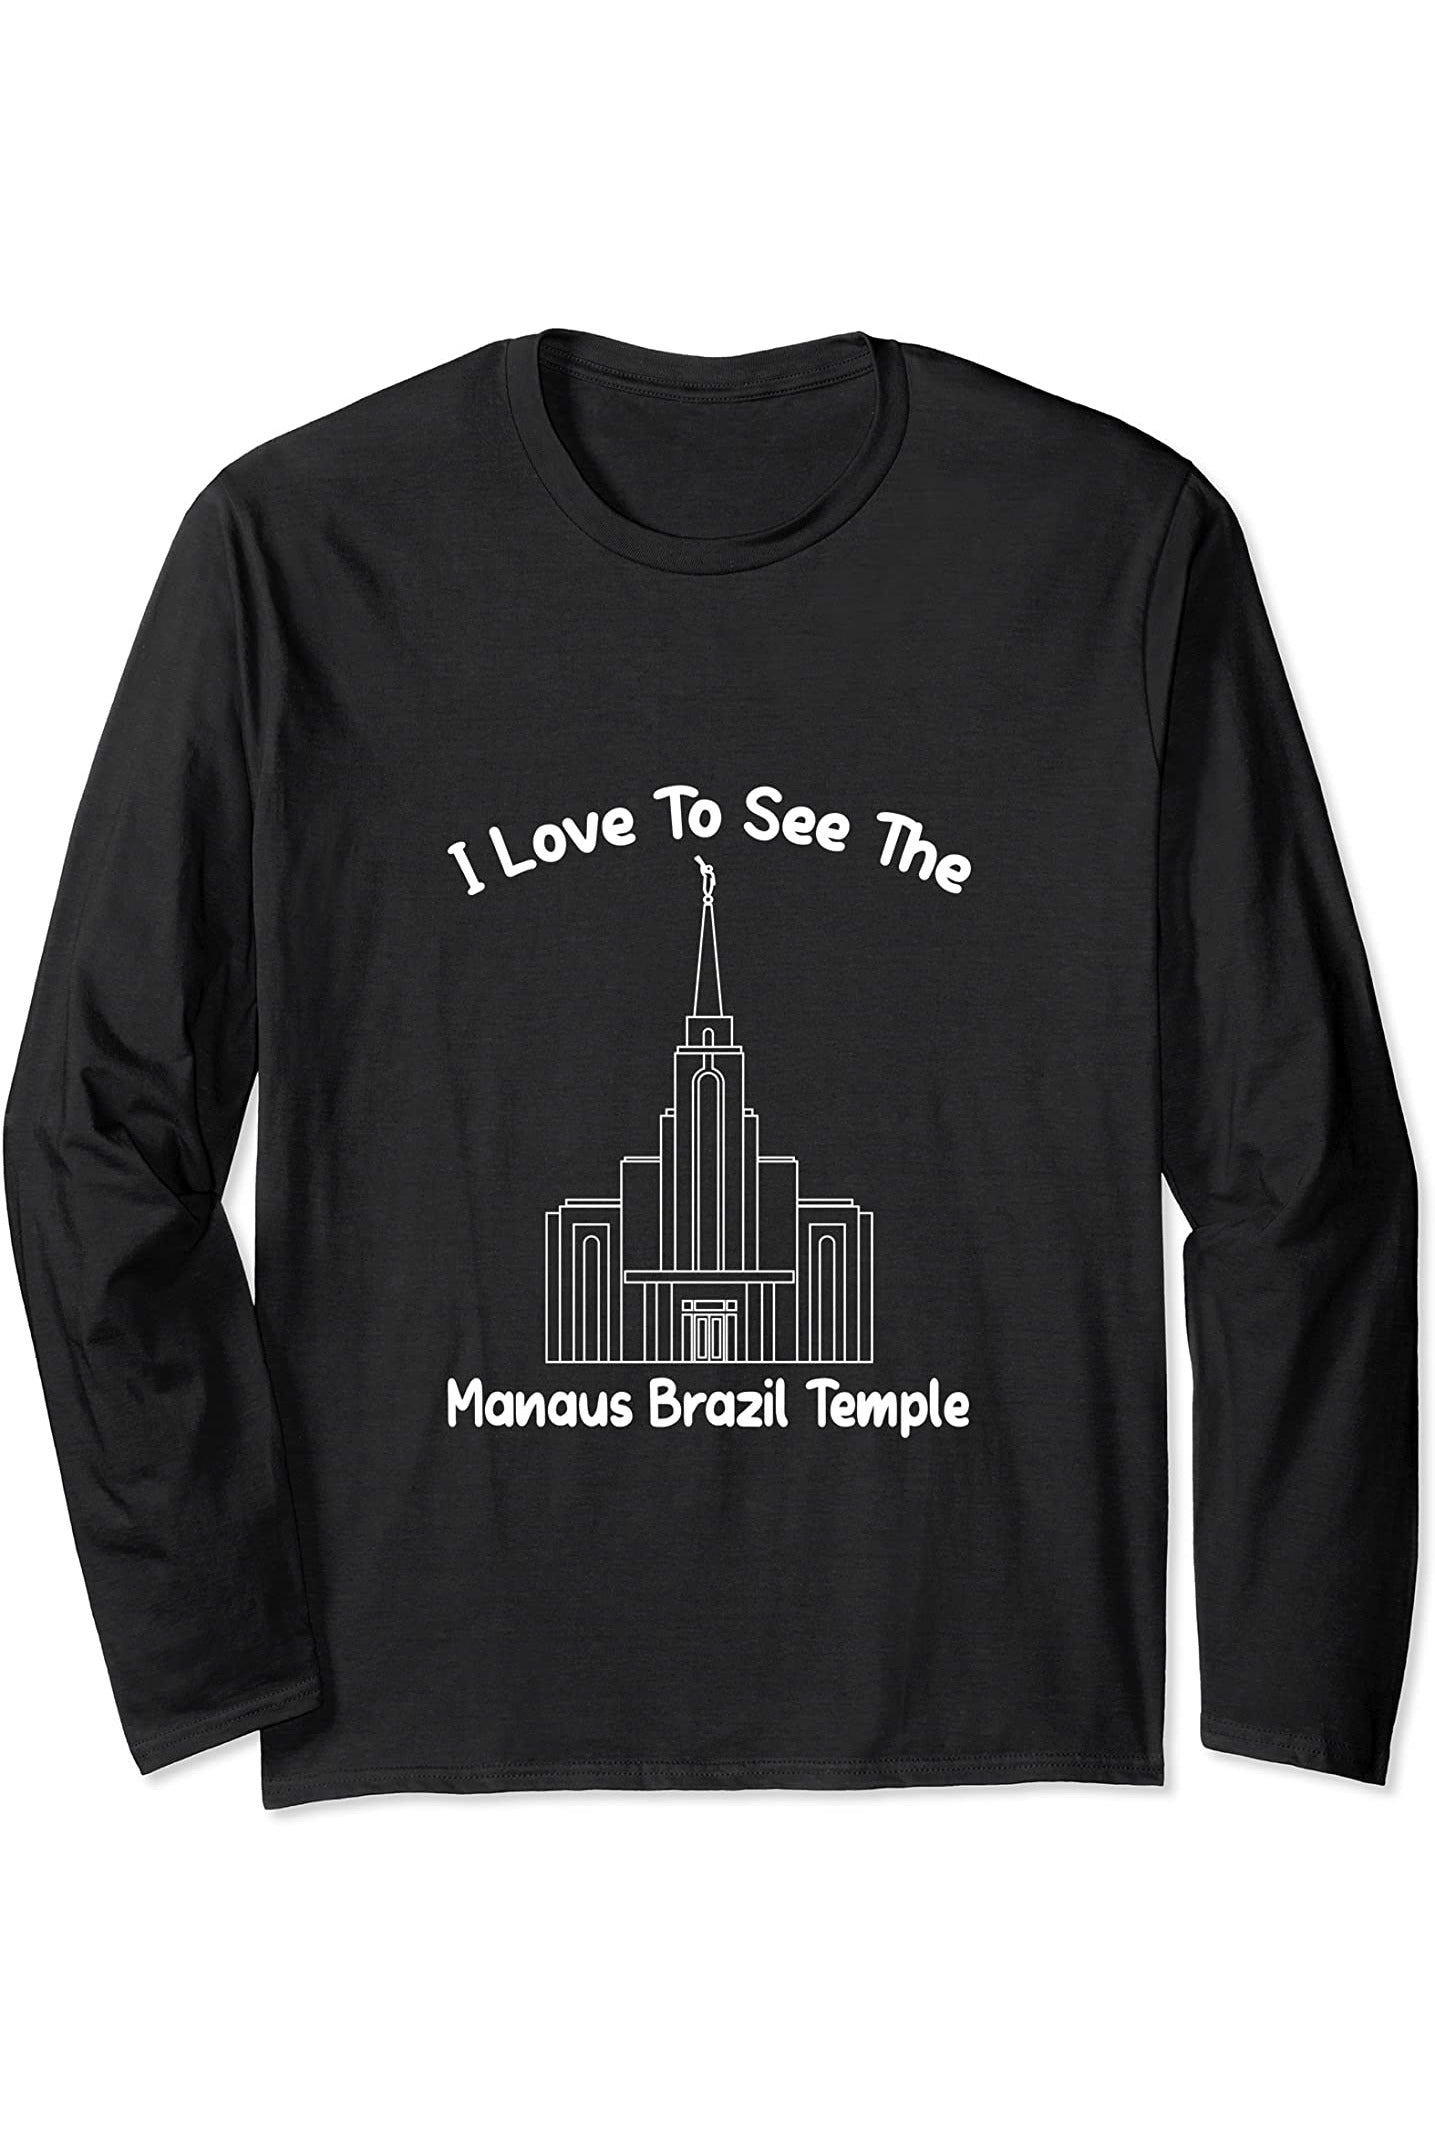 Manaus Brazil Temple Long Sleeve T-Shirt - Primary Style (English) US